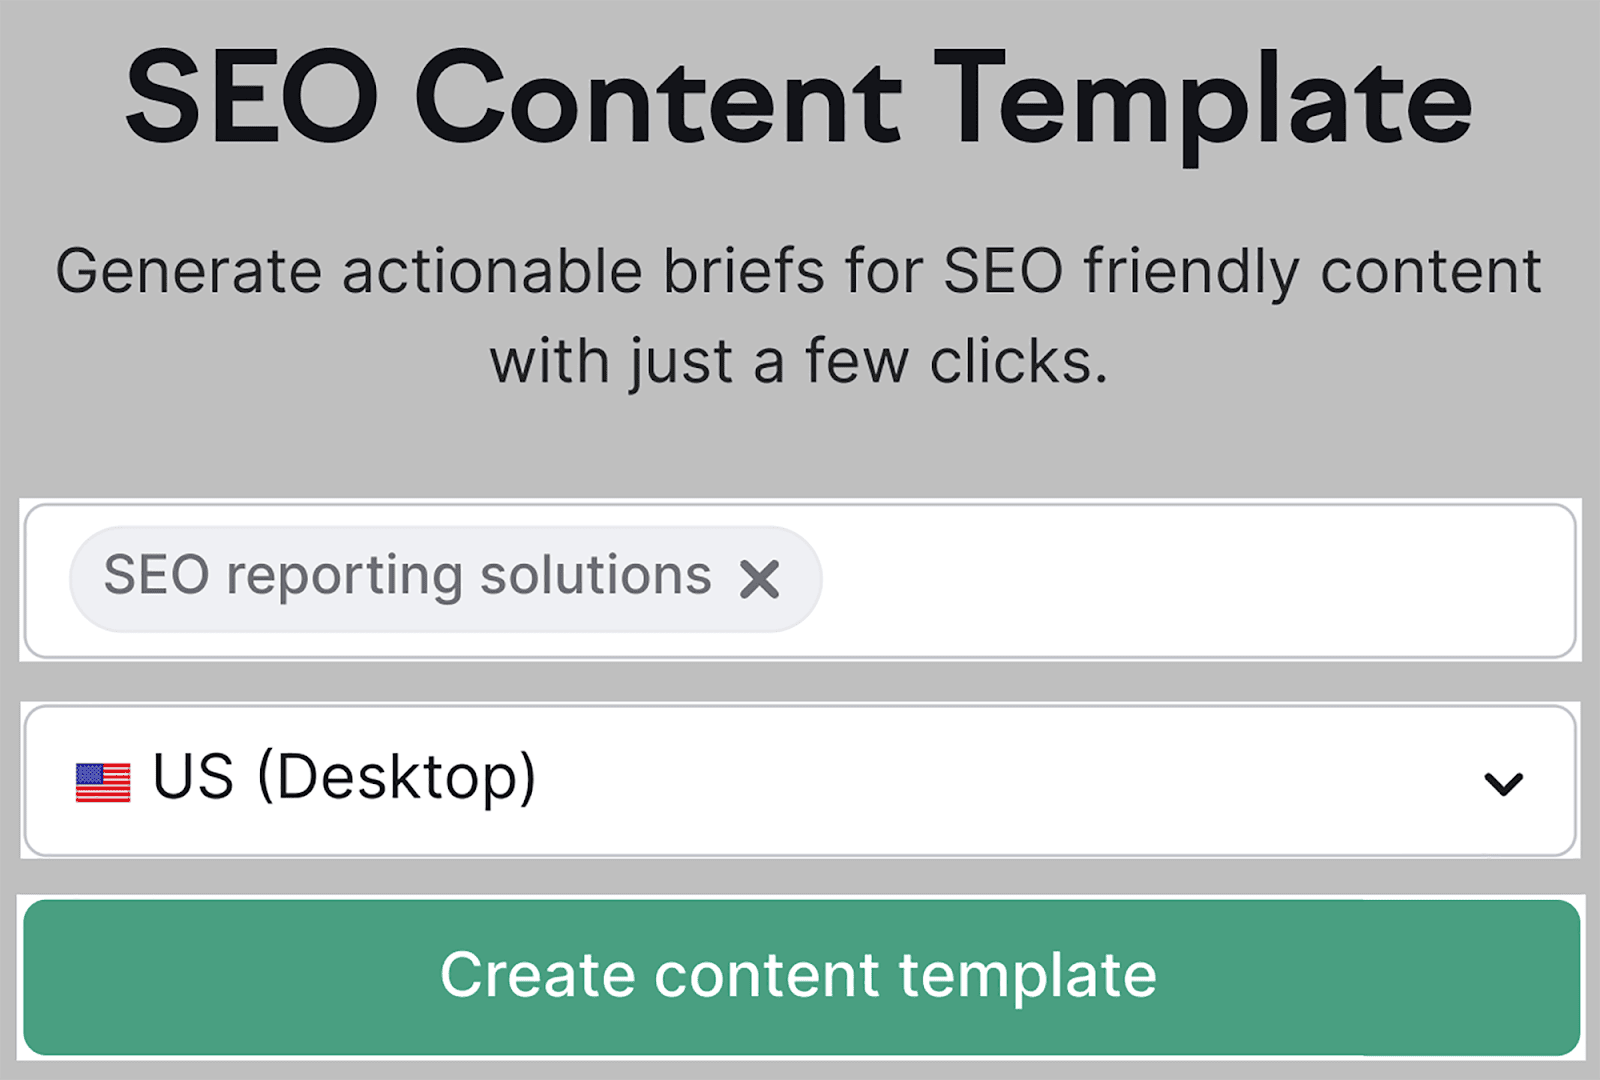 Create content template